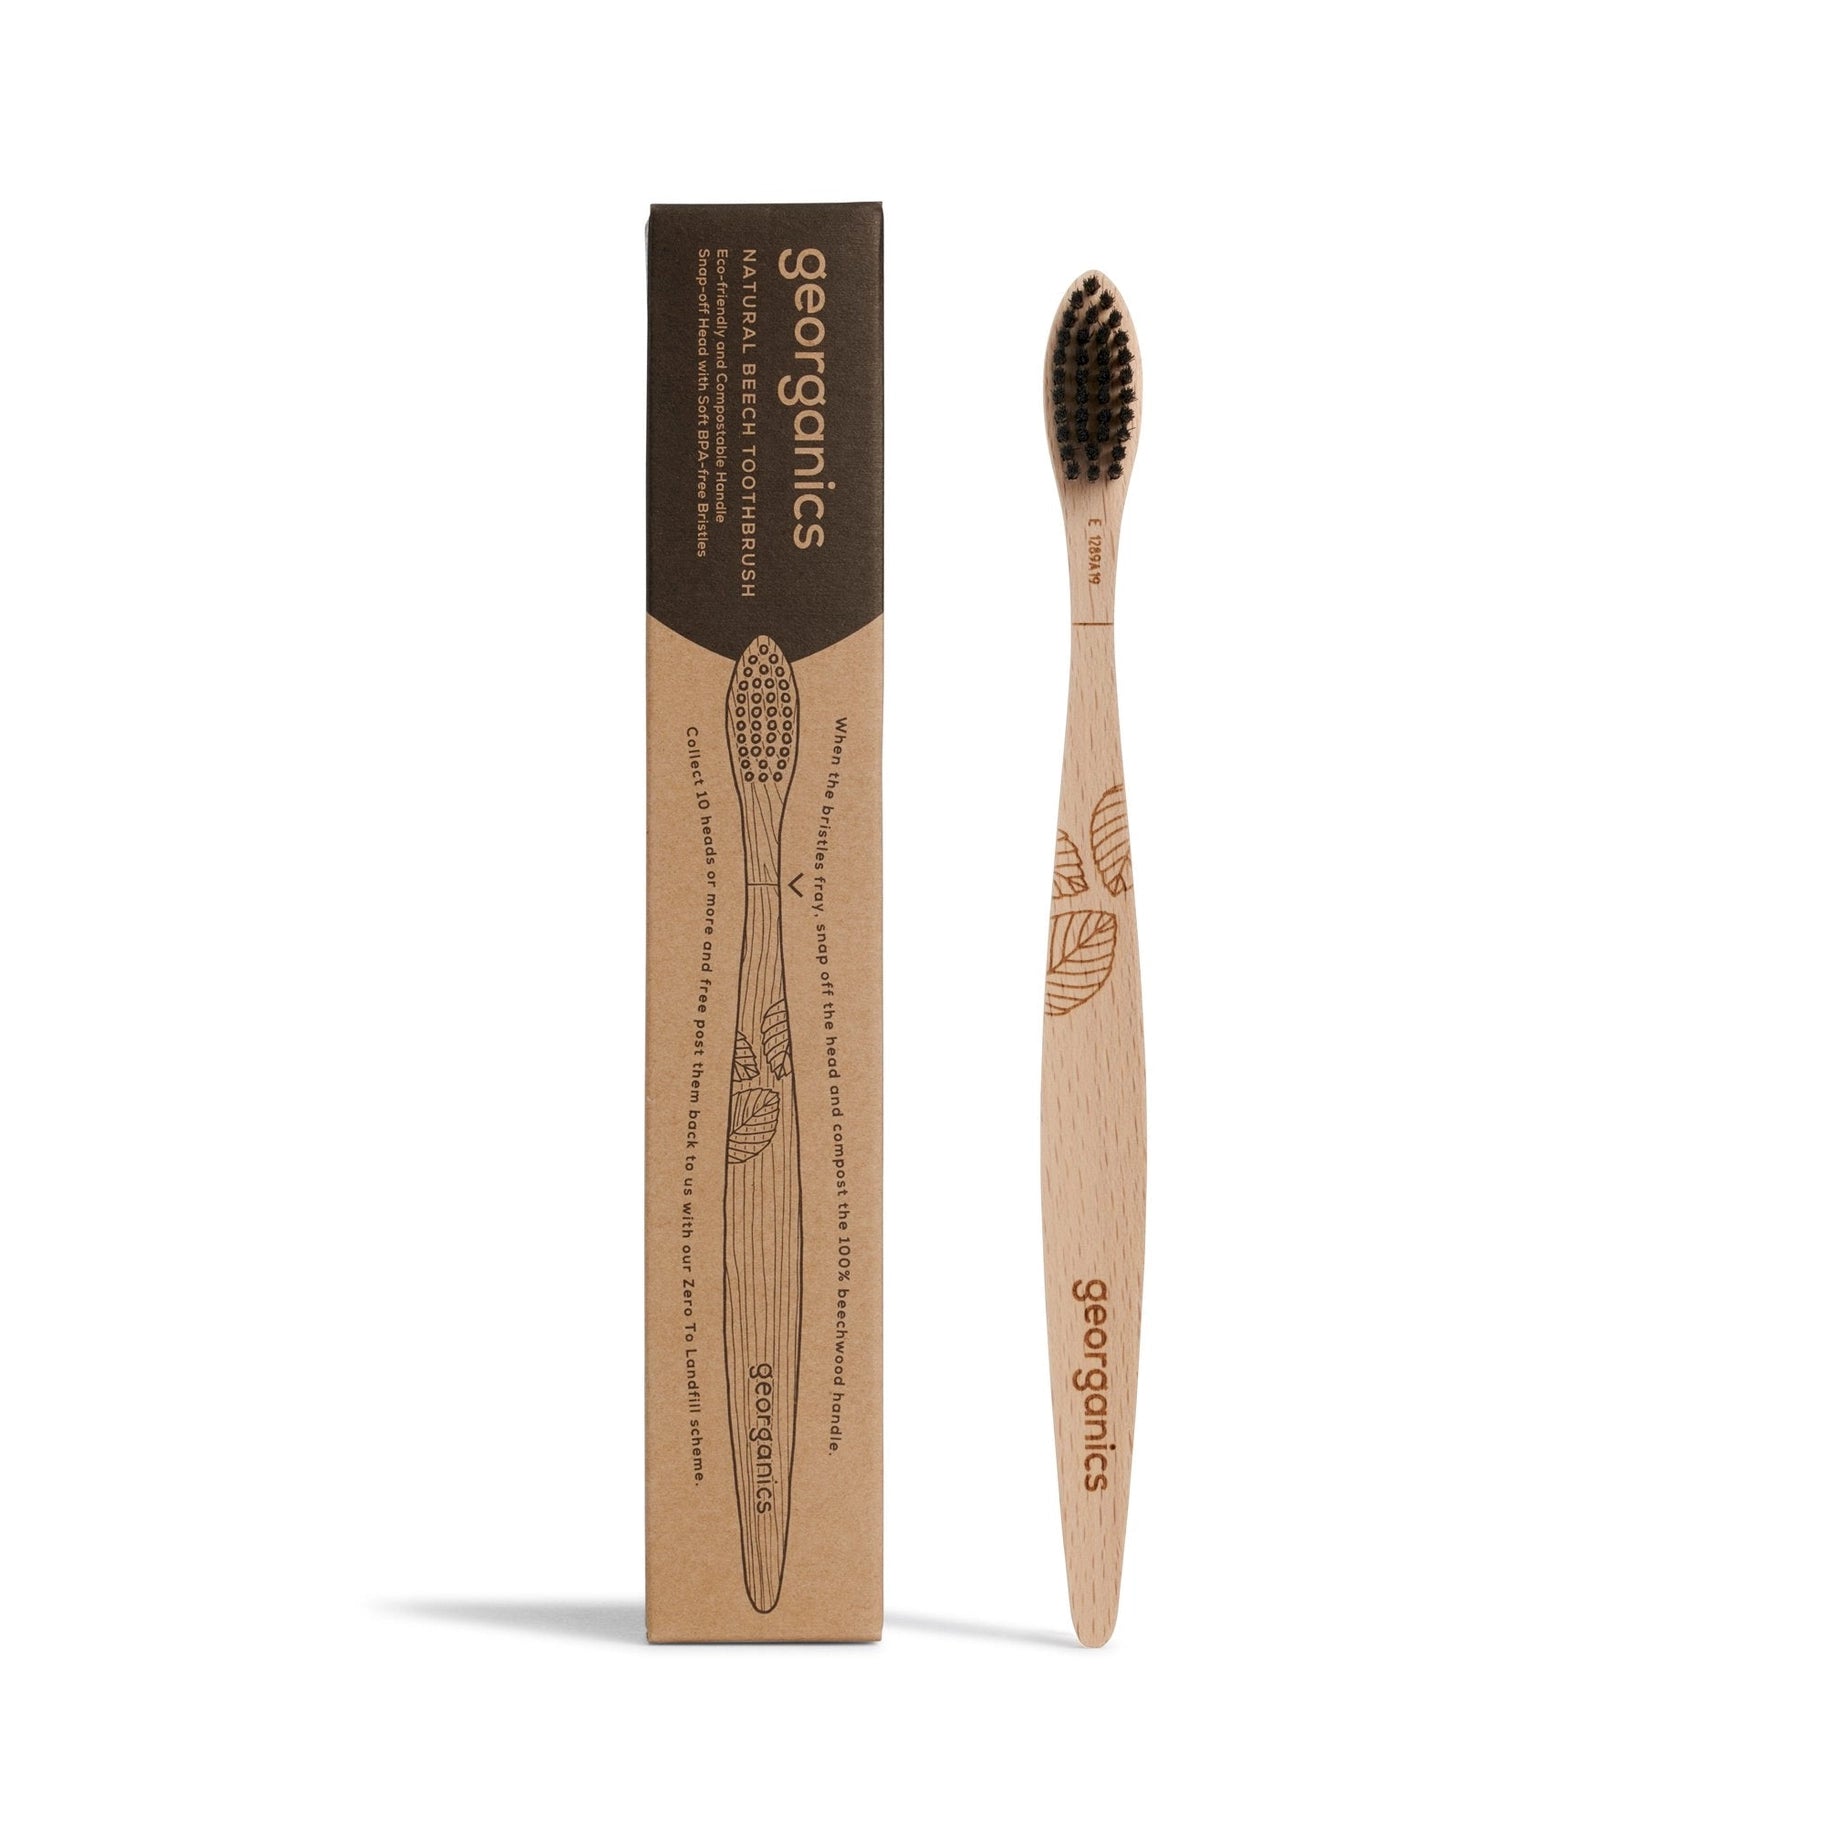 Beechwood Toothbrush - Soft Bristles